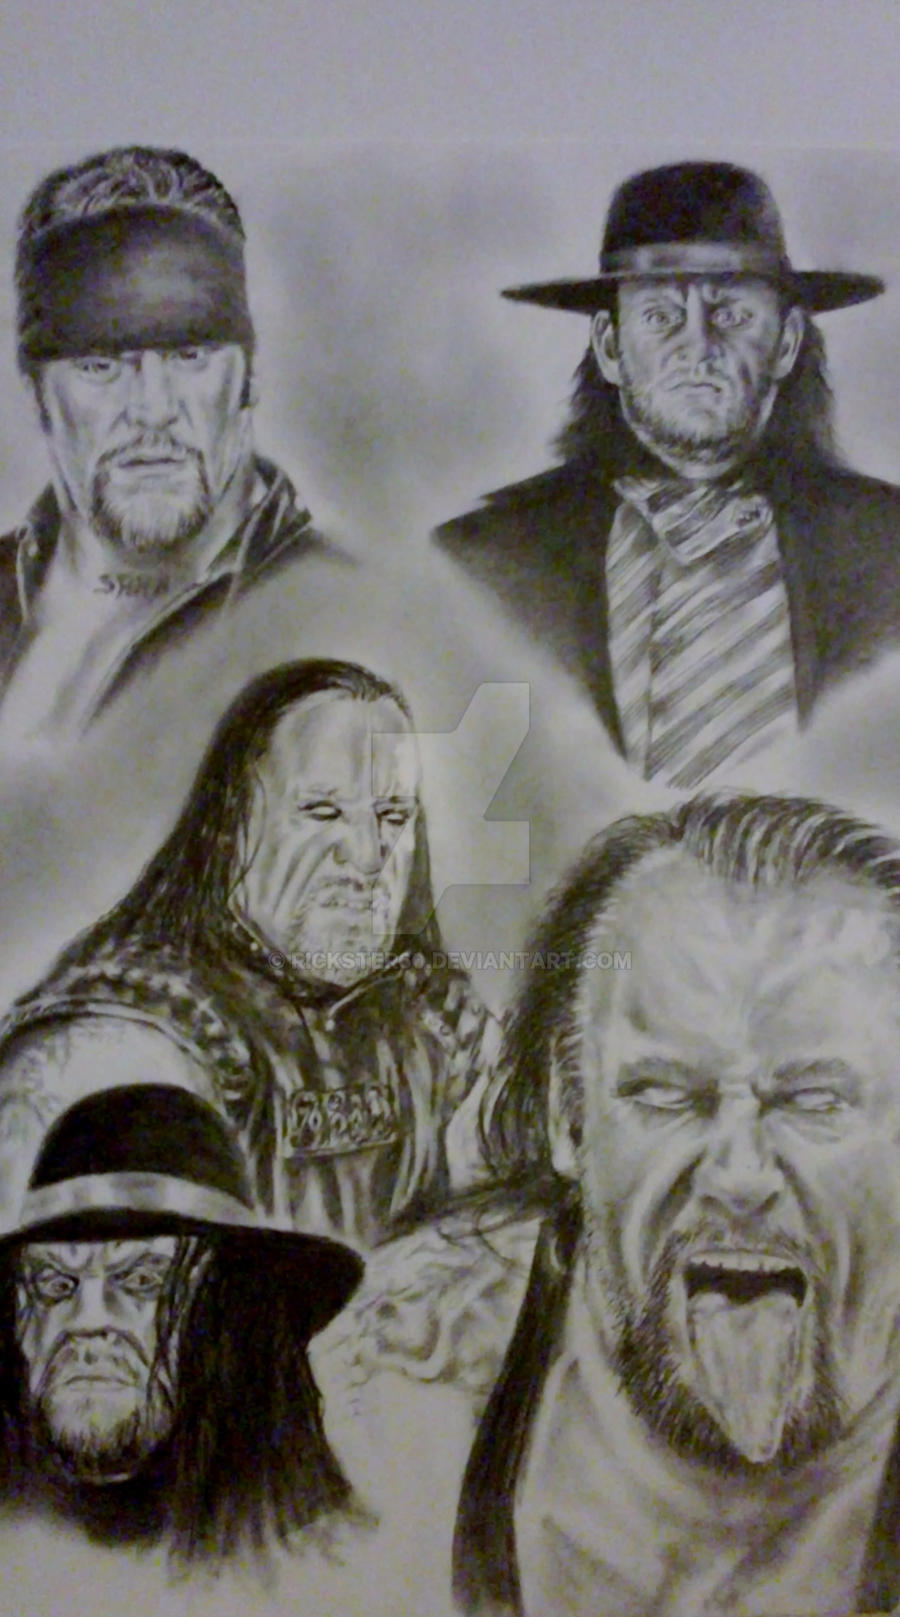 The Undertaker By Rickster60 On DeviantArt.